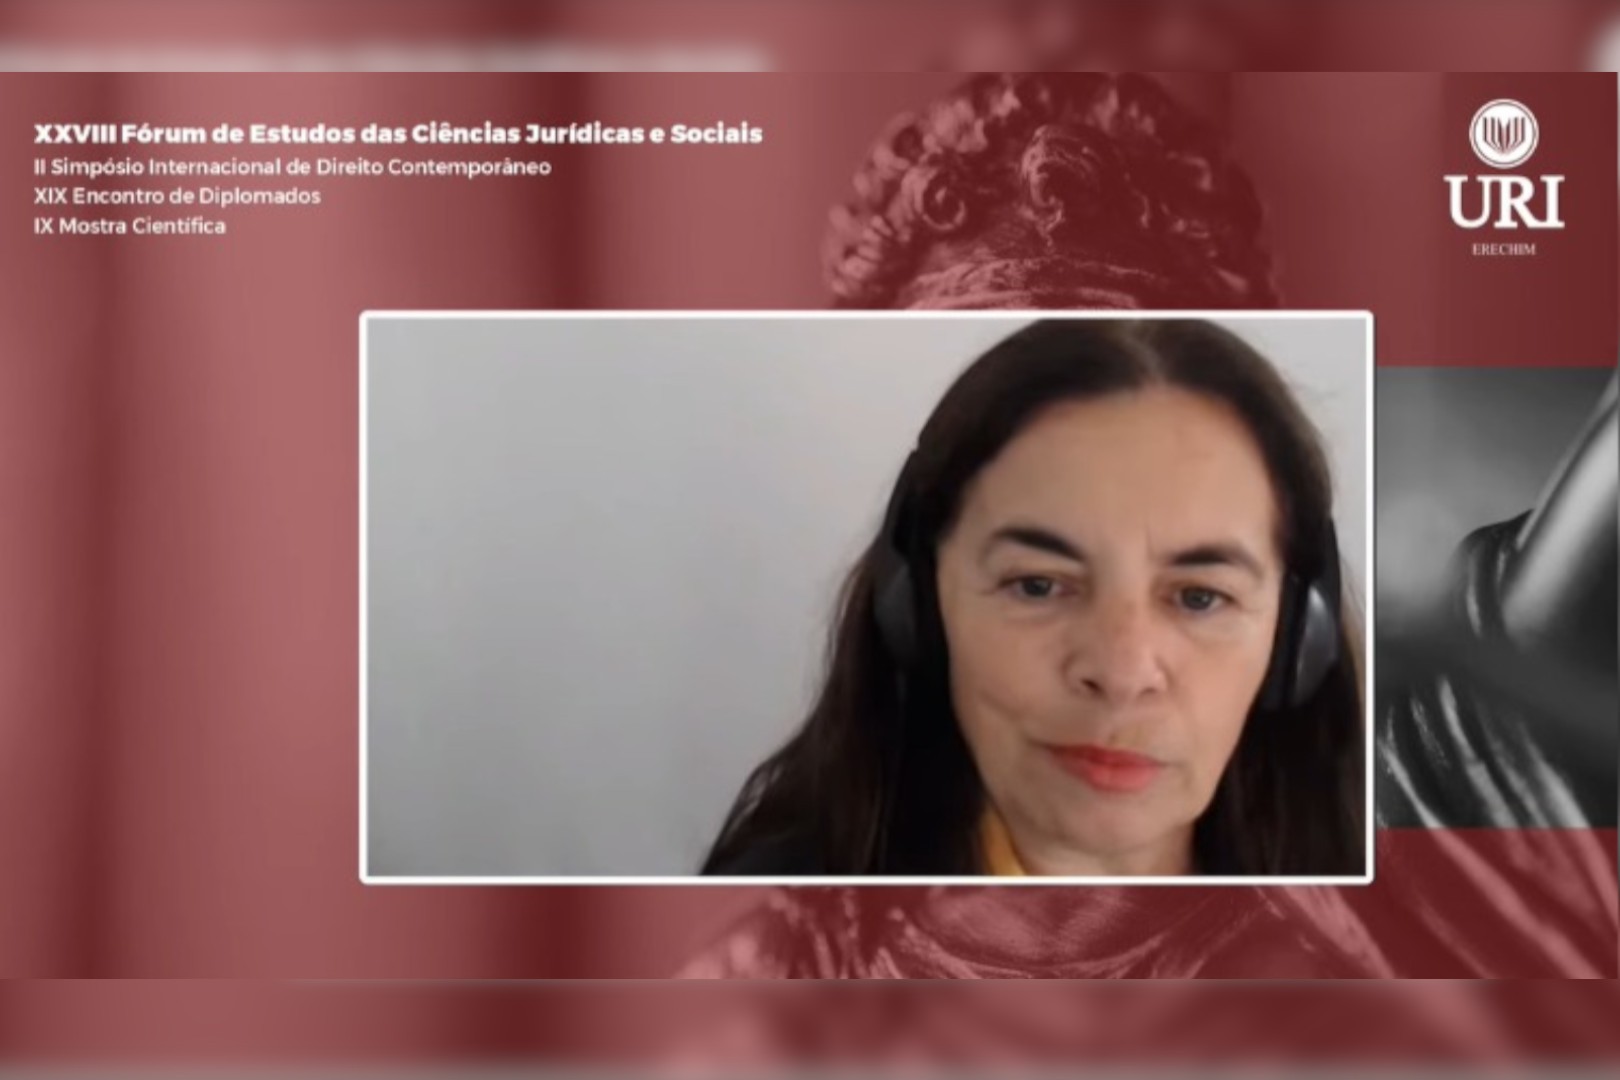  Cristina Maria de Gouveia Caldeira, da Universidade de Lisboa, tratou da privacidade e do biodireito